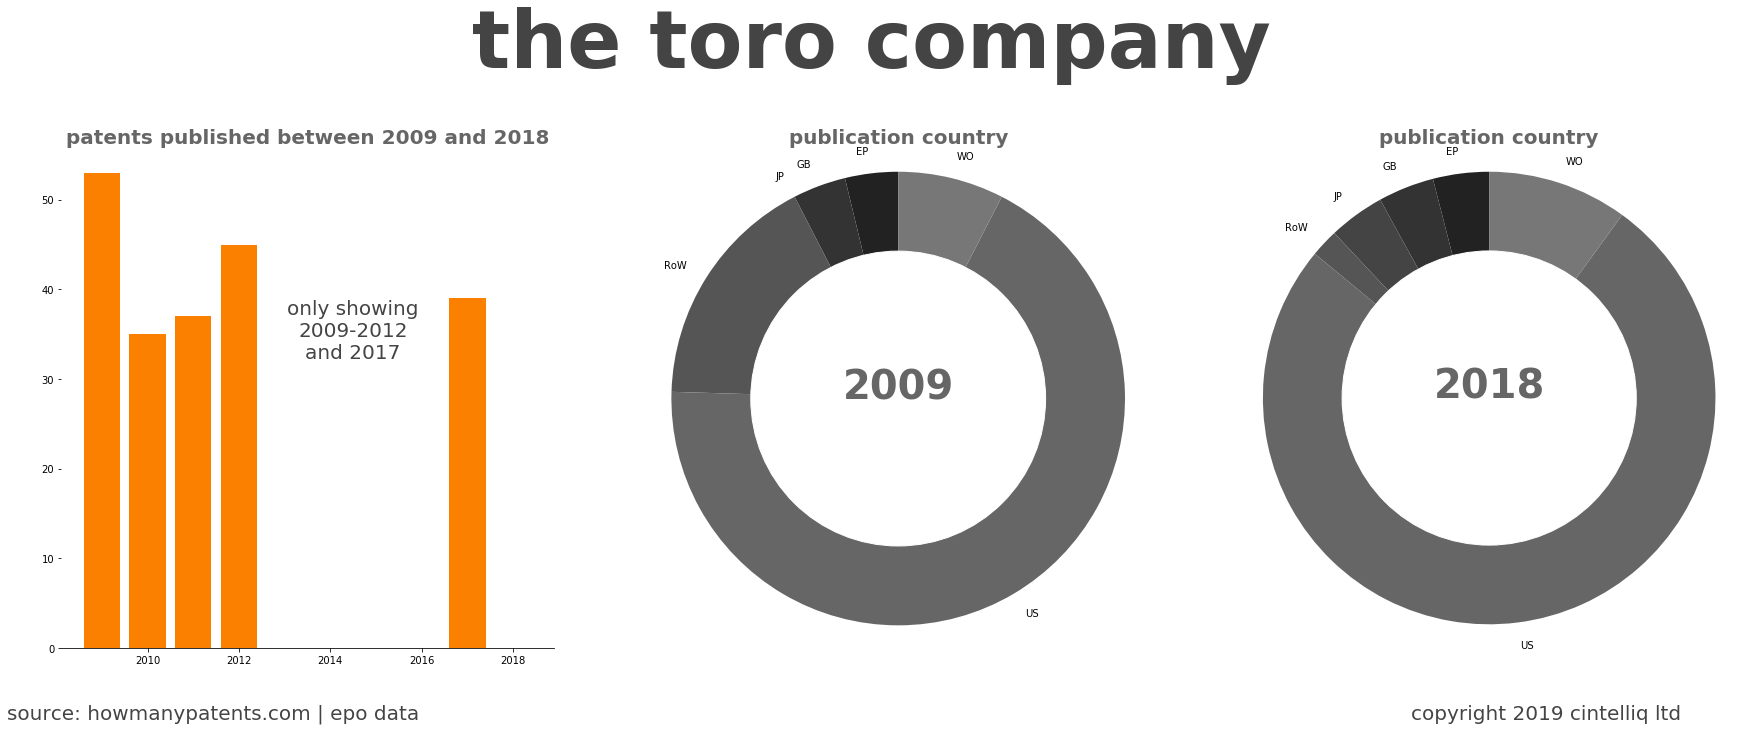 summary of patents for The Toro Company